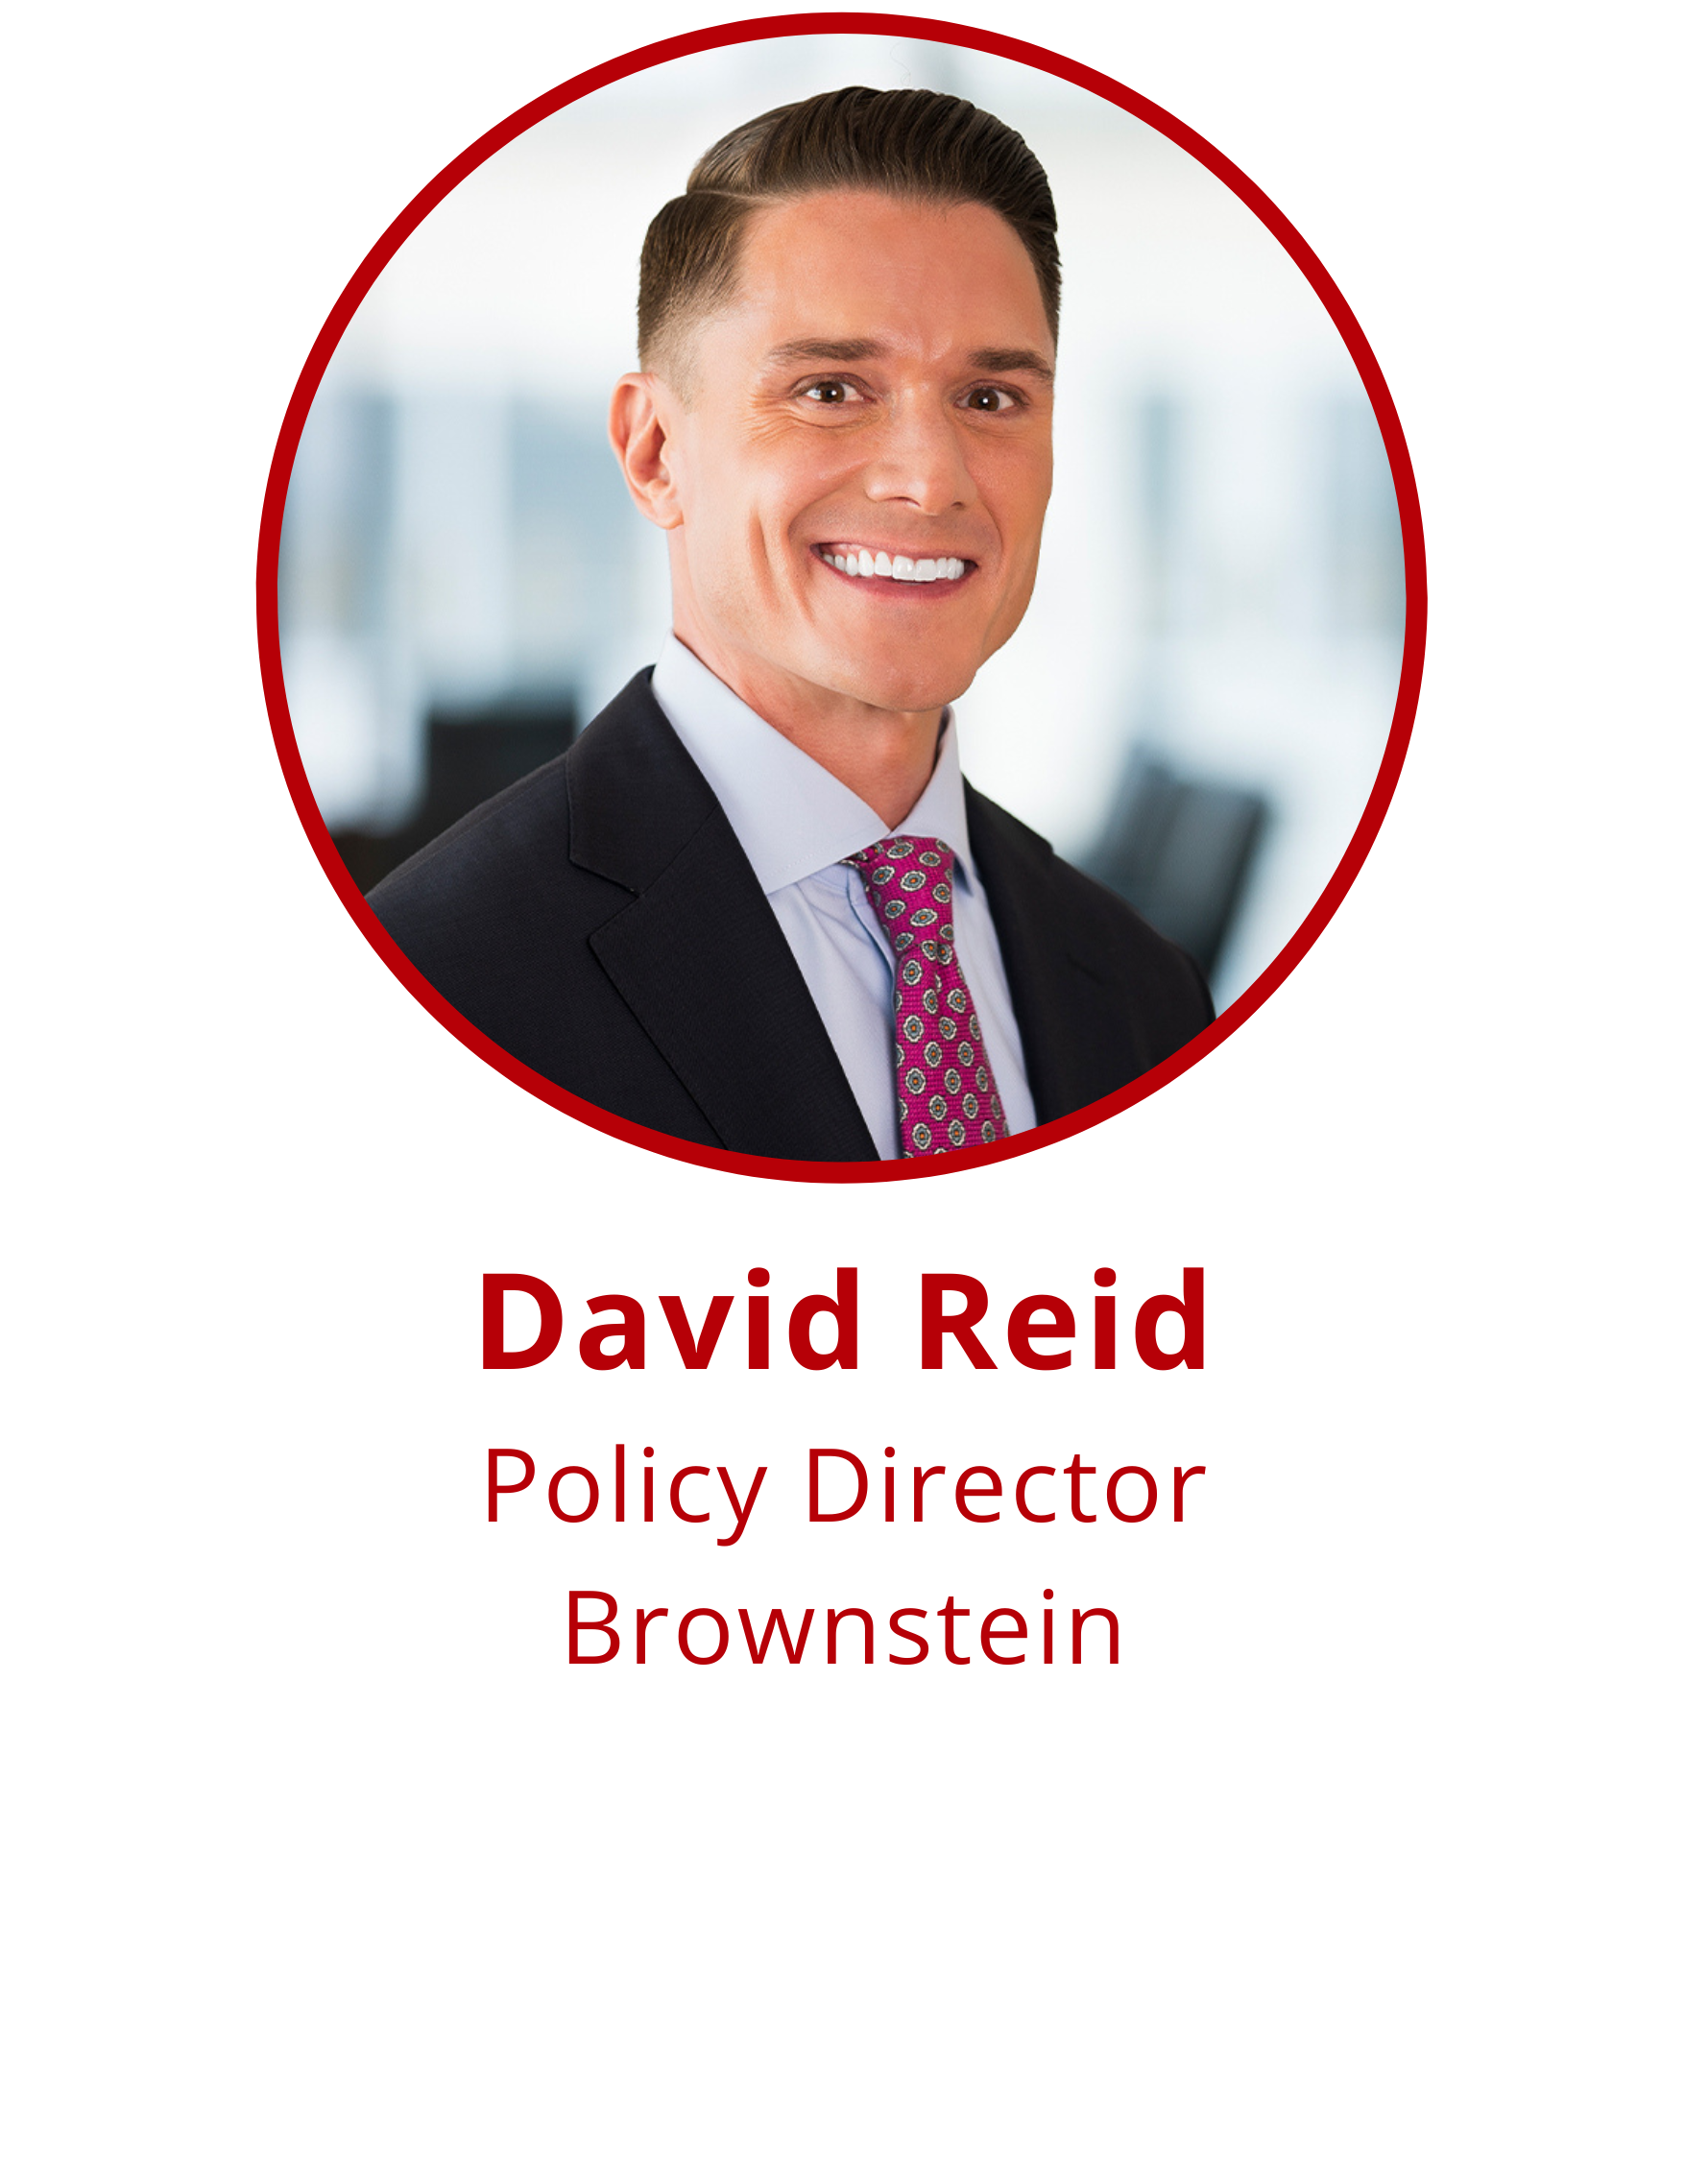 David Reid; Senior Policy Advisor at Brownstein